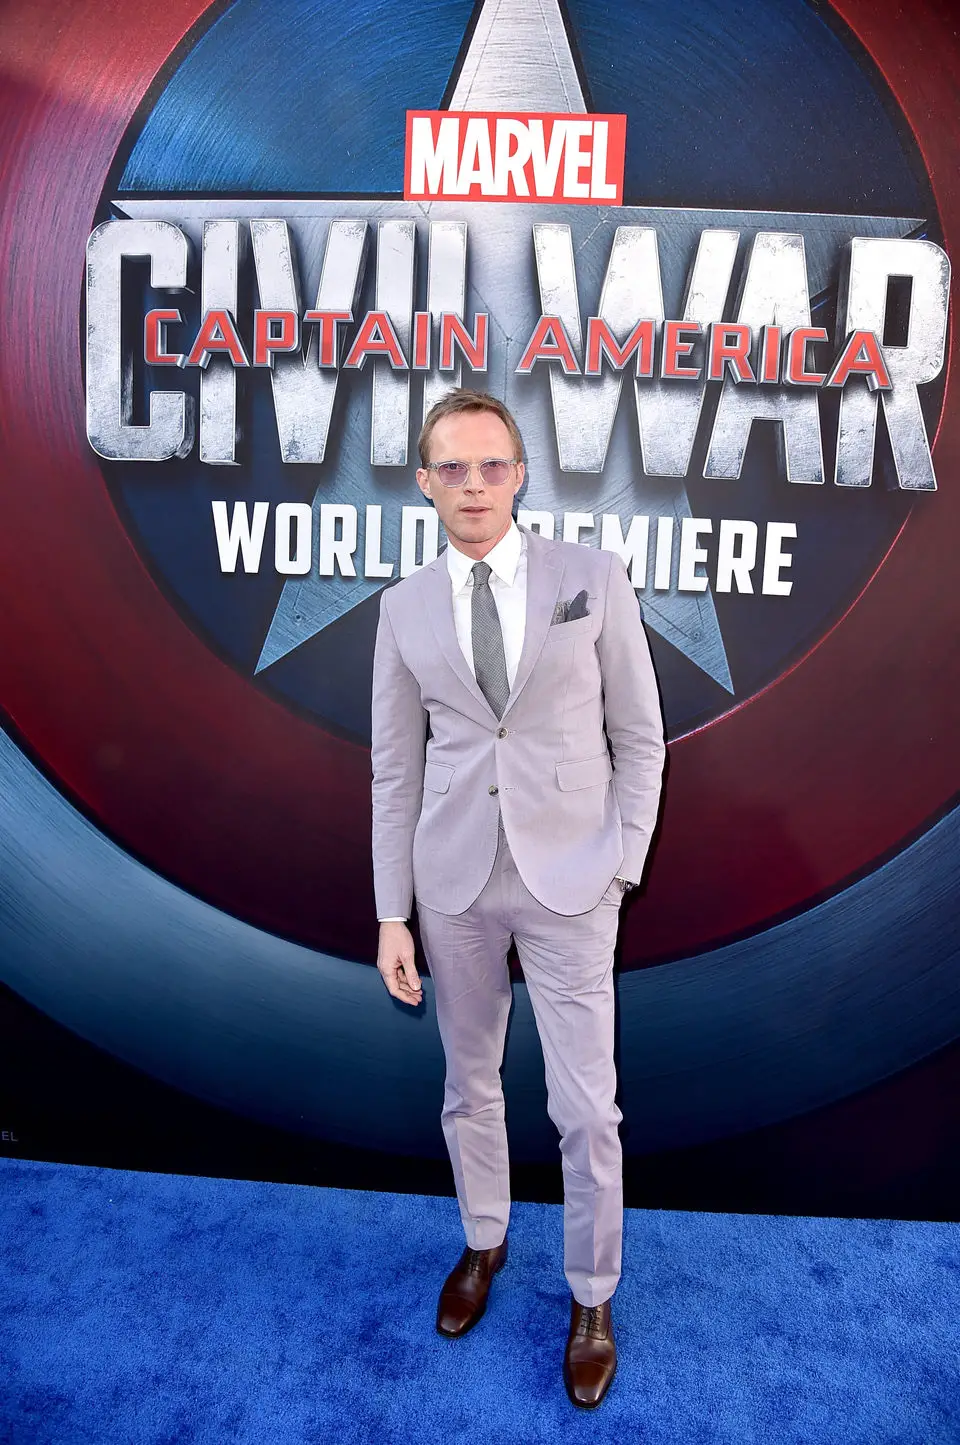 Bettany at Civil War: Captain America Premiere